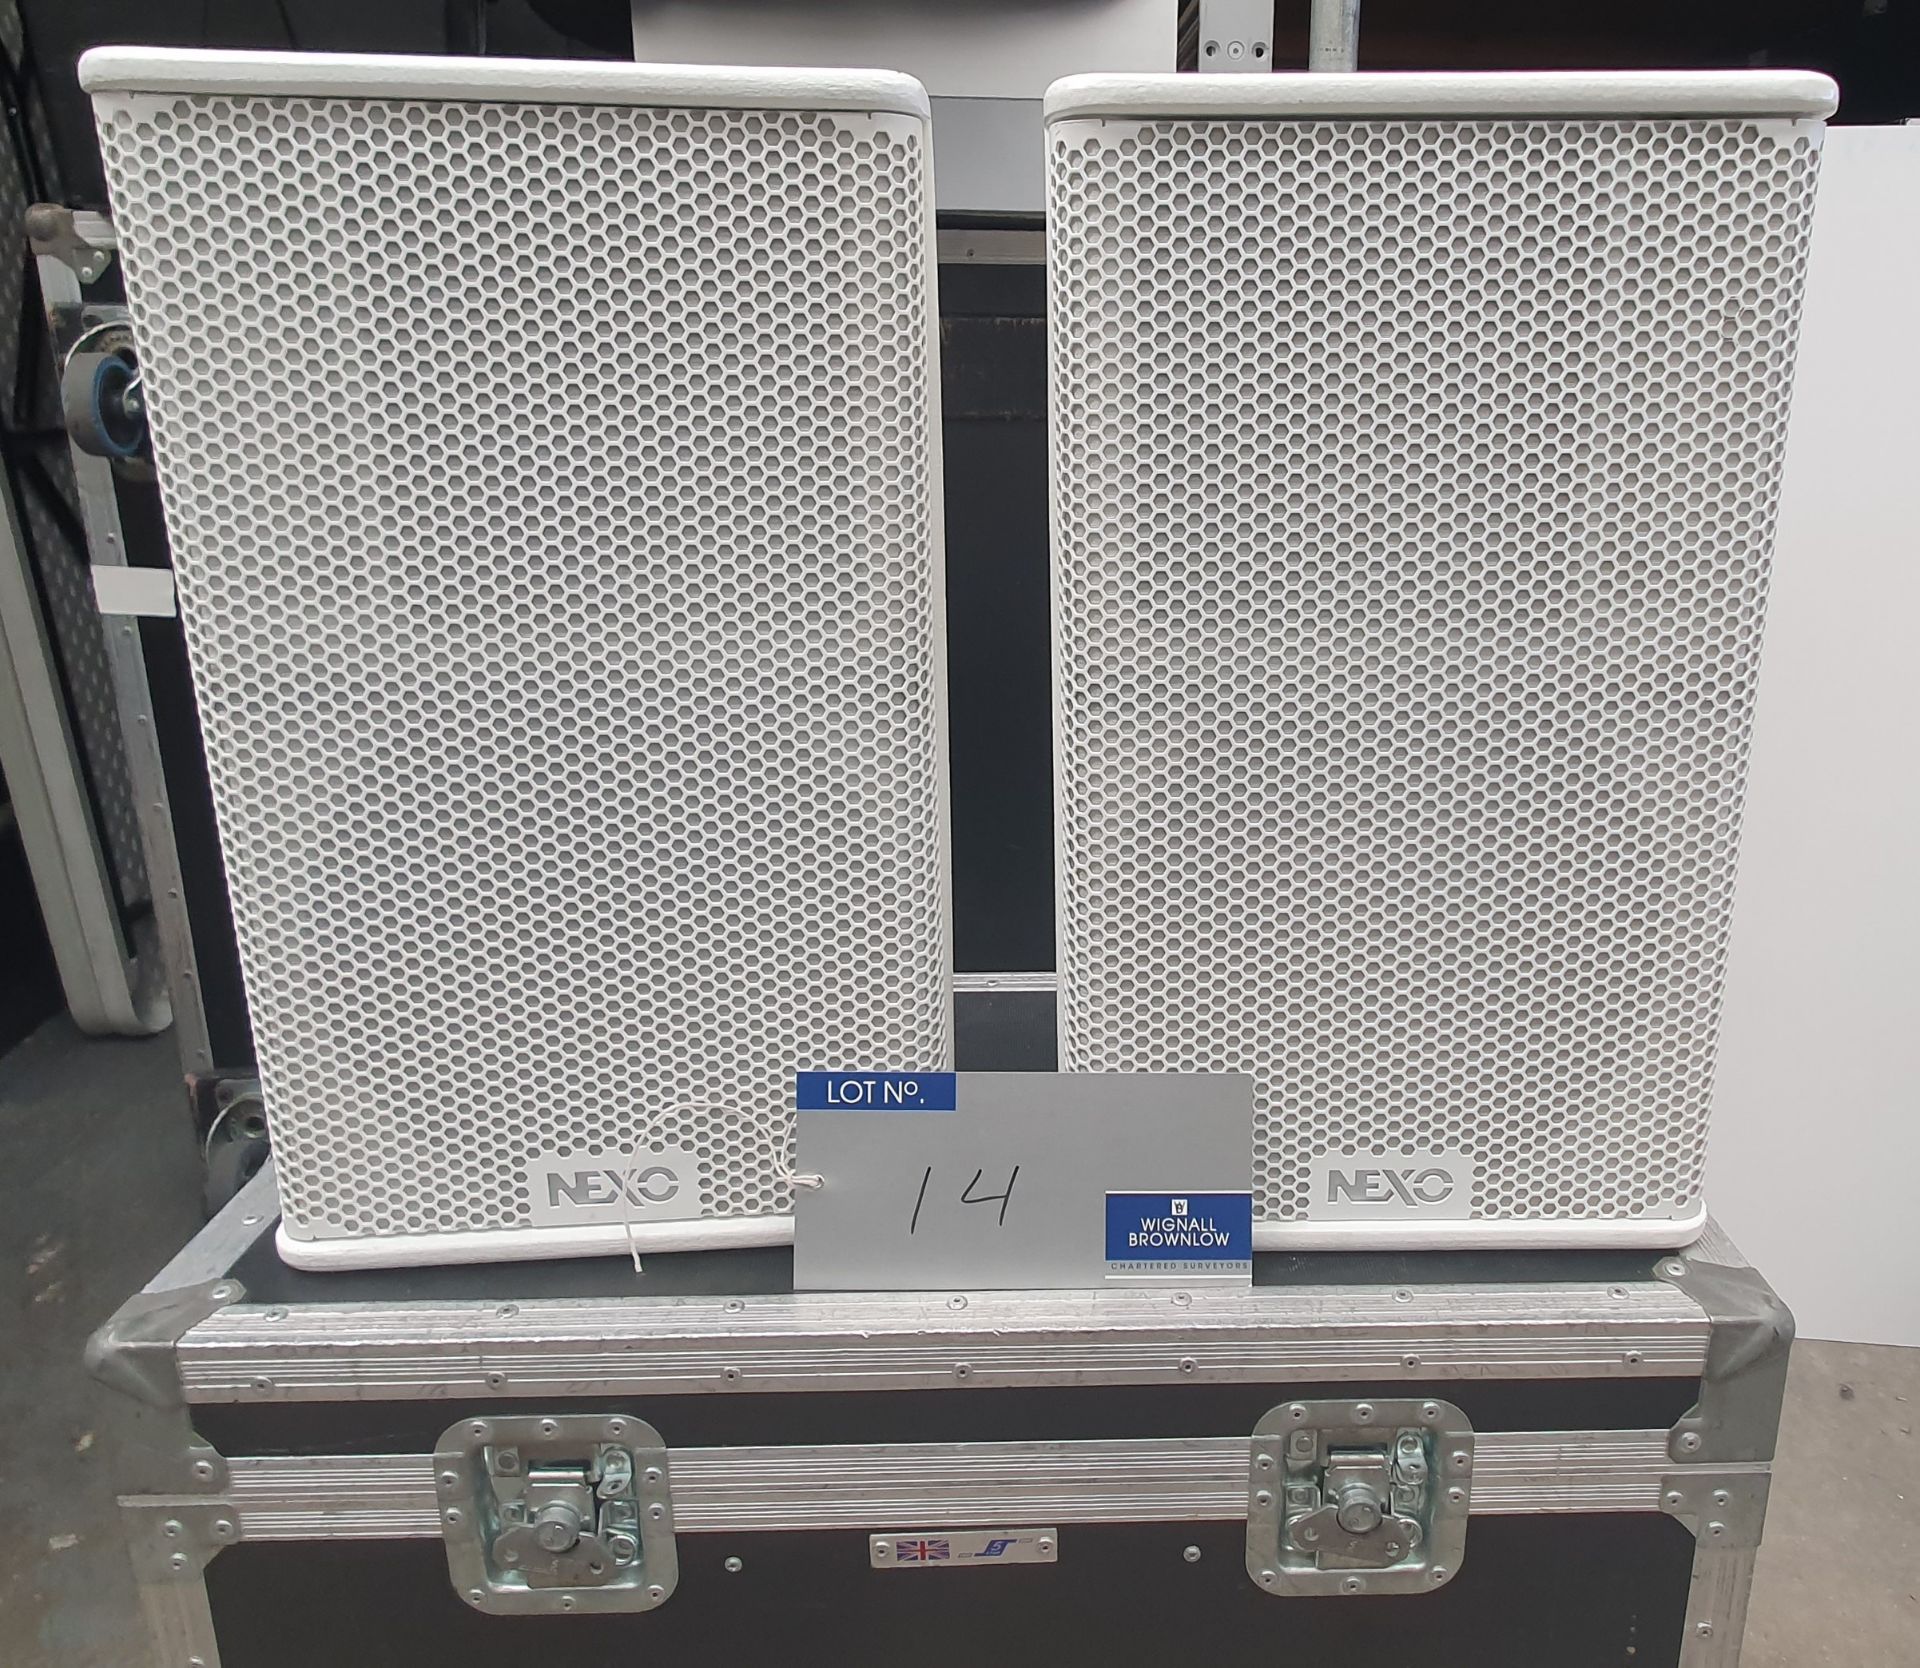 A Pair of White Nexo PS10 Full Range Loudspeakers with 5star mobile flight case.